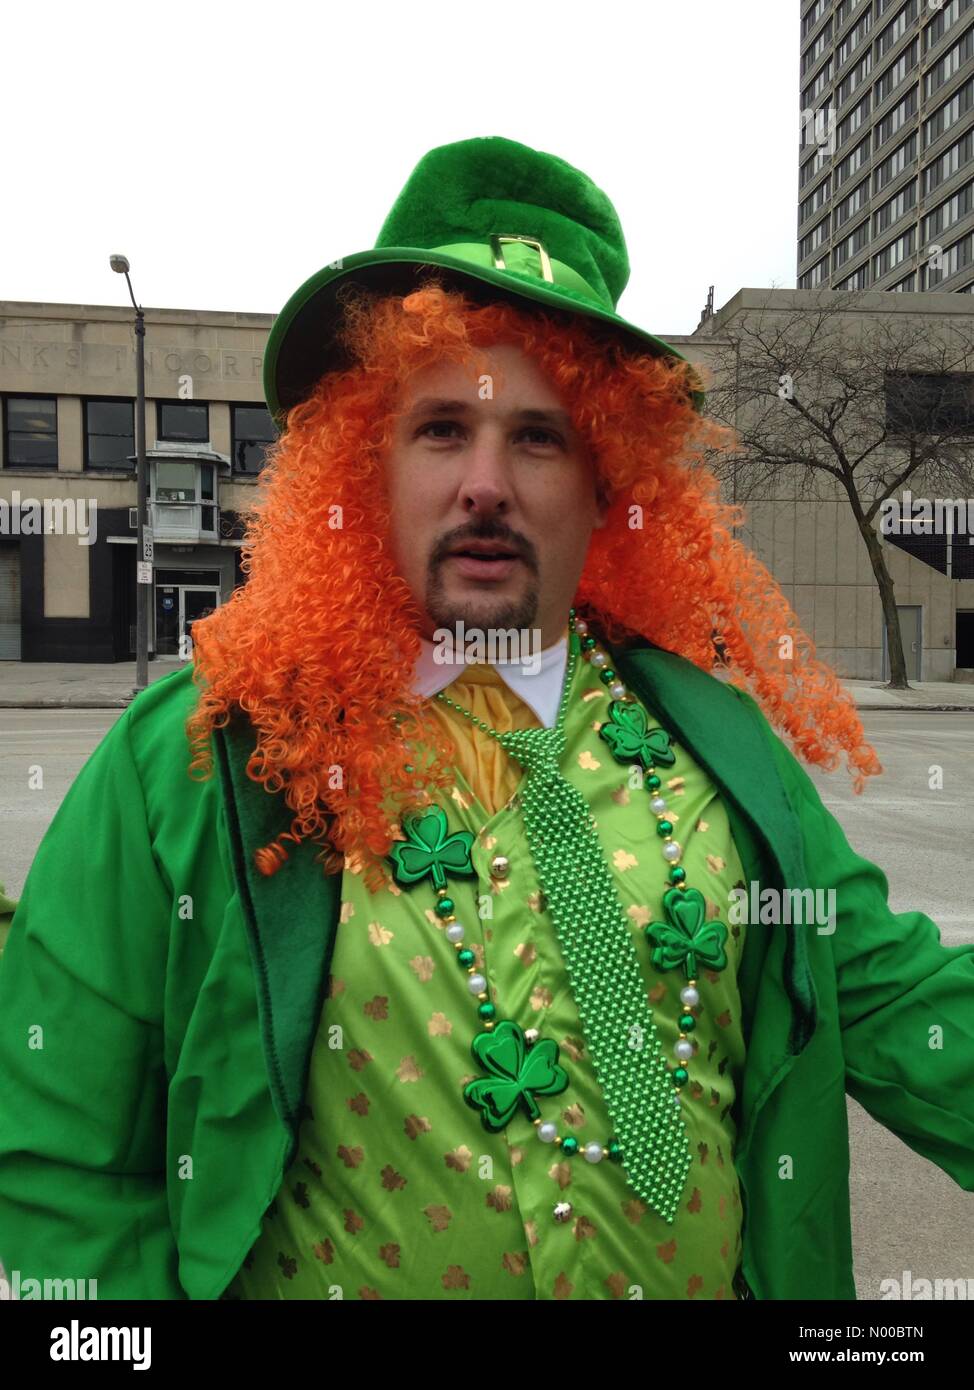 Cleveland, USA. 17. März 2017. Curtis LaBarbera bereit für die Cleveland Ohio St. Patricks parade Credit: Mark Kanning / StockimoNews/Alamy Live News Stockfoto